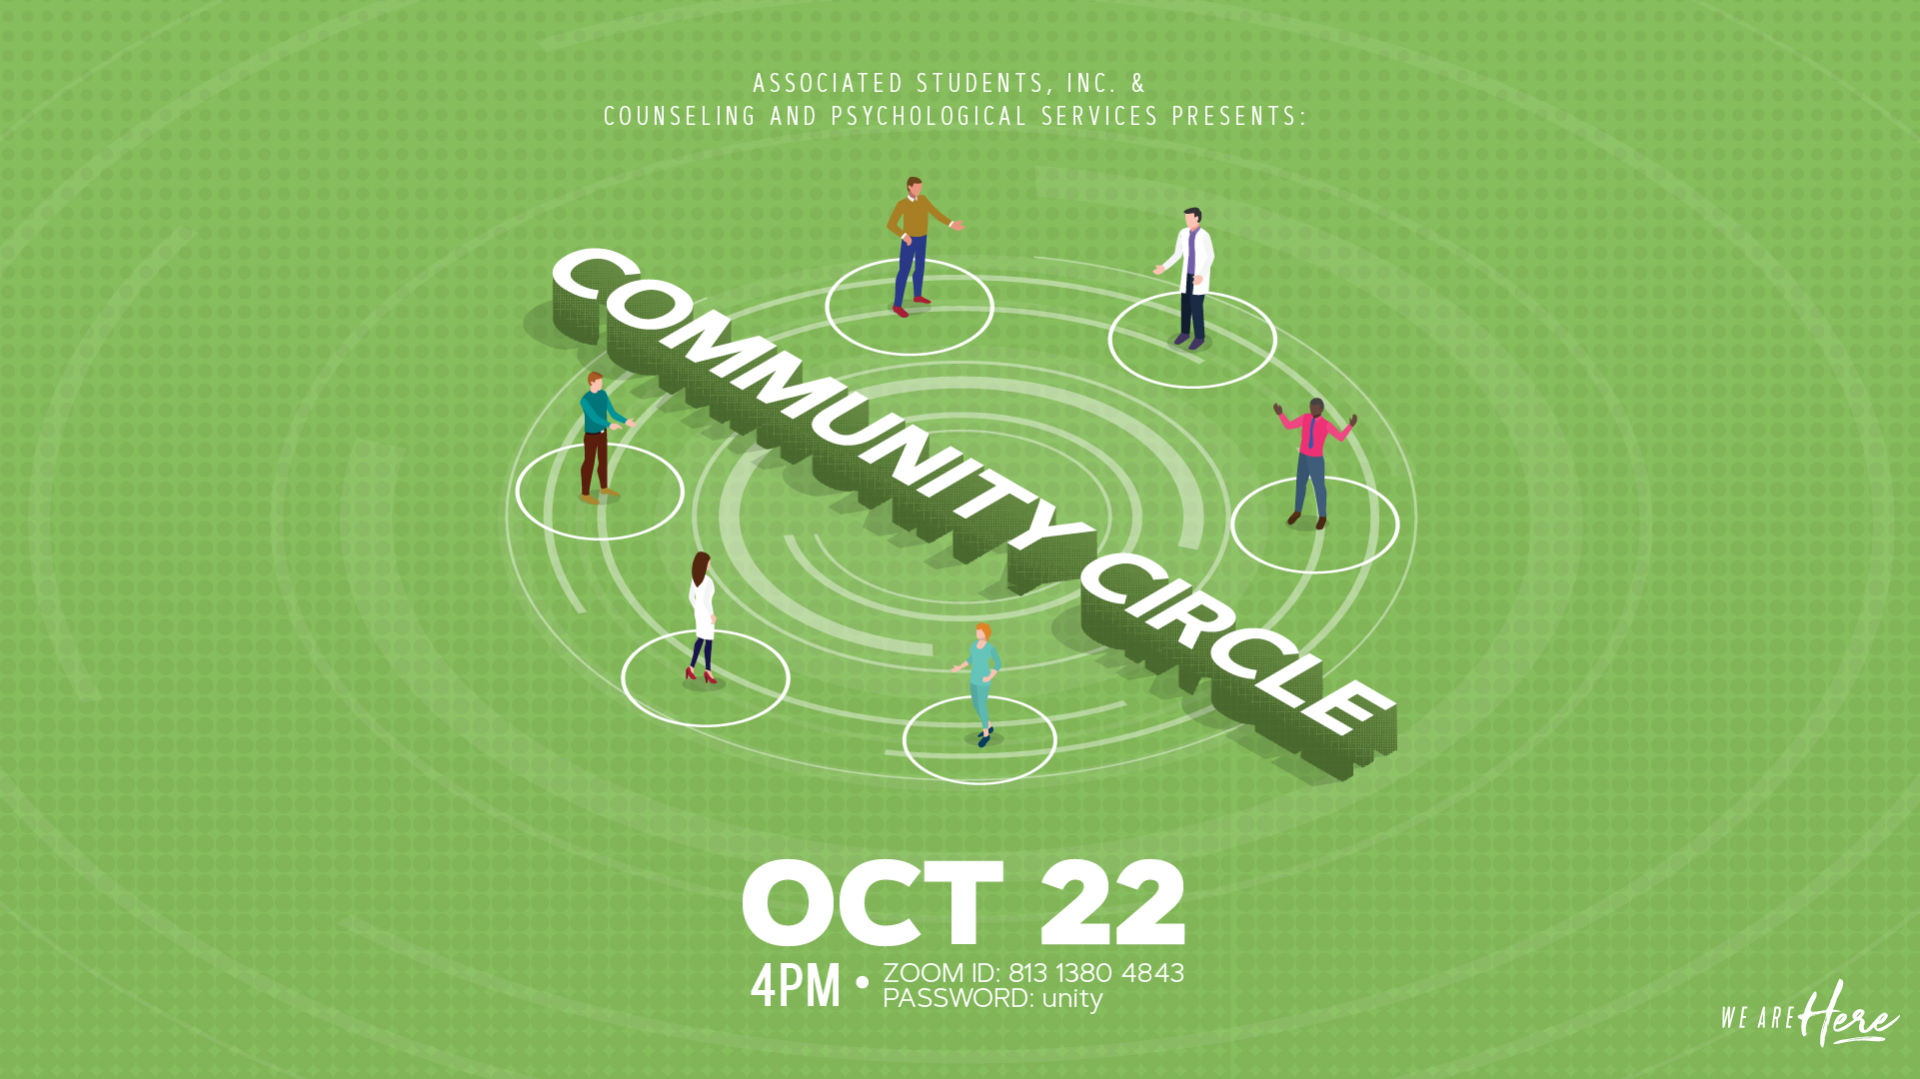 ASI and CAPS present: Community Circle